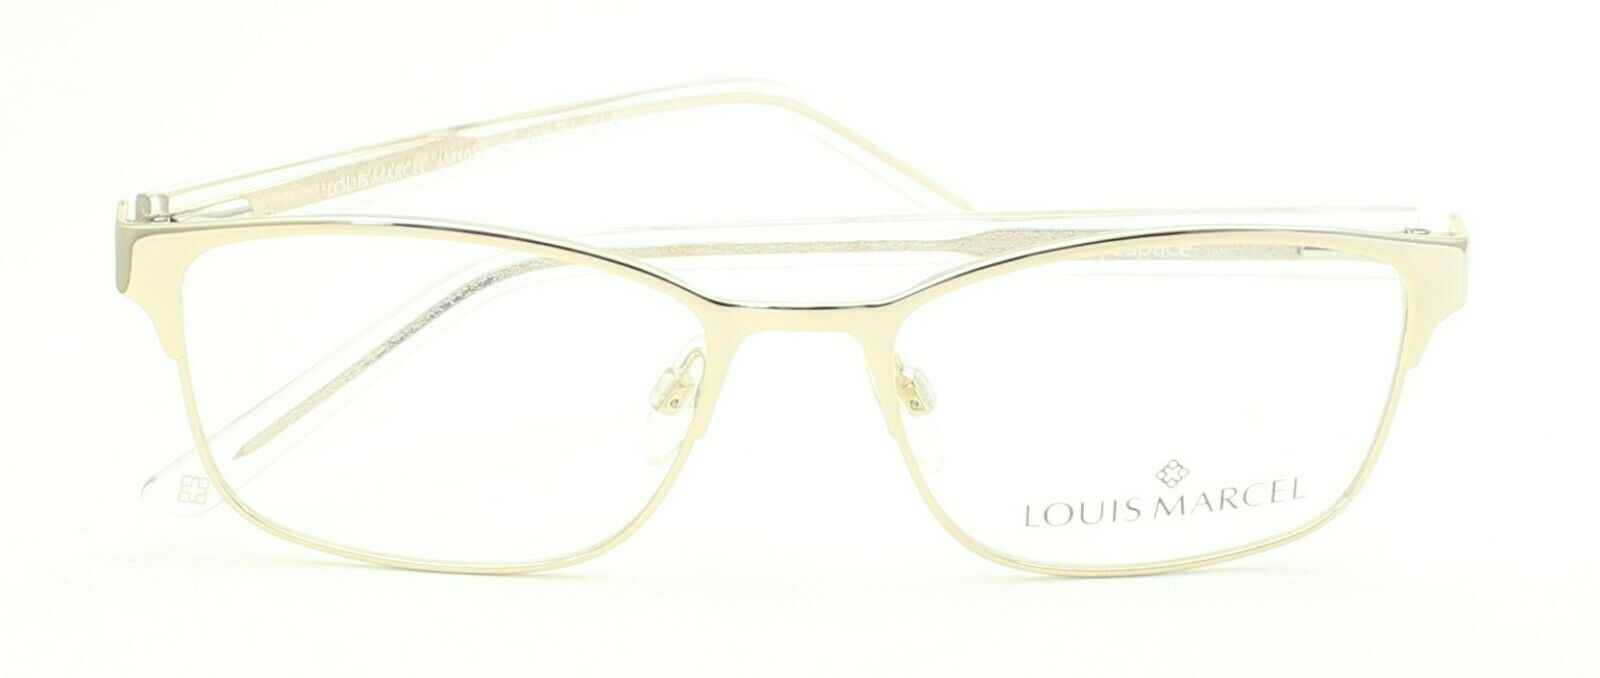 LOUIS MARCEL LM1032 C1 51mm Eyewear FRAMES RX Optical Eyeglasses Glasses - New